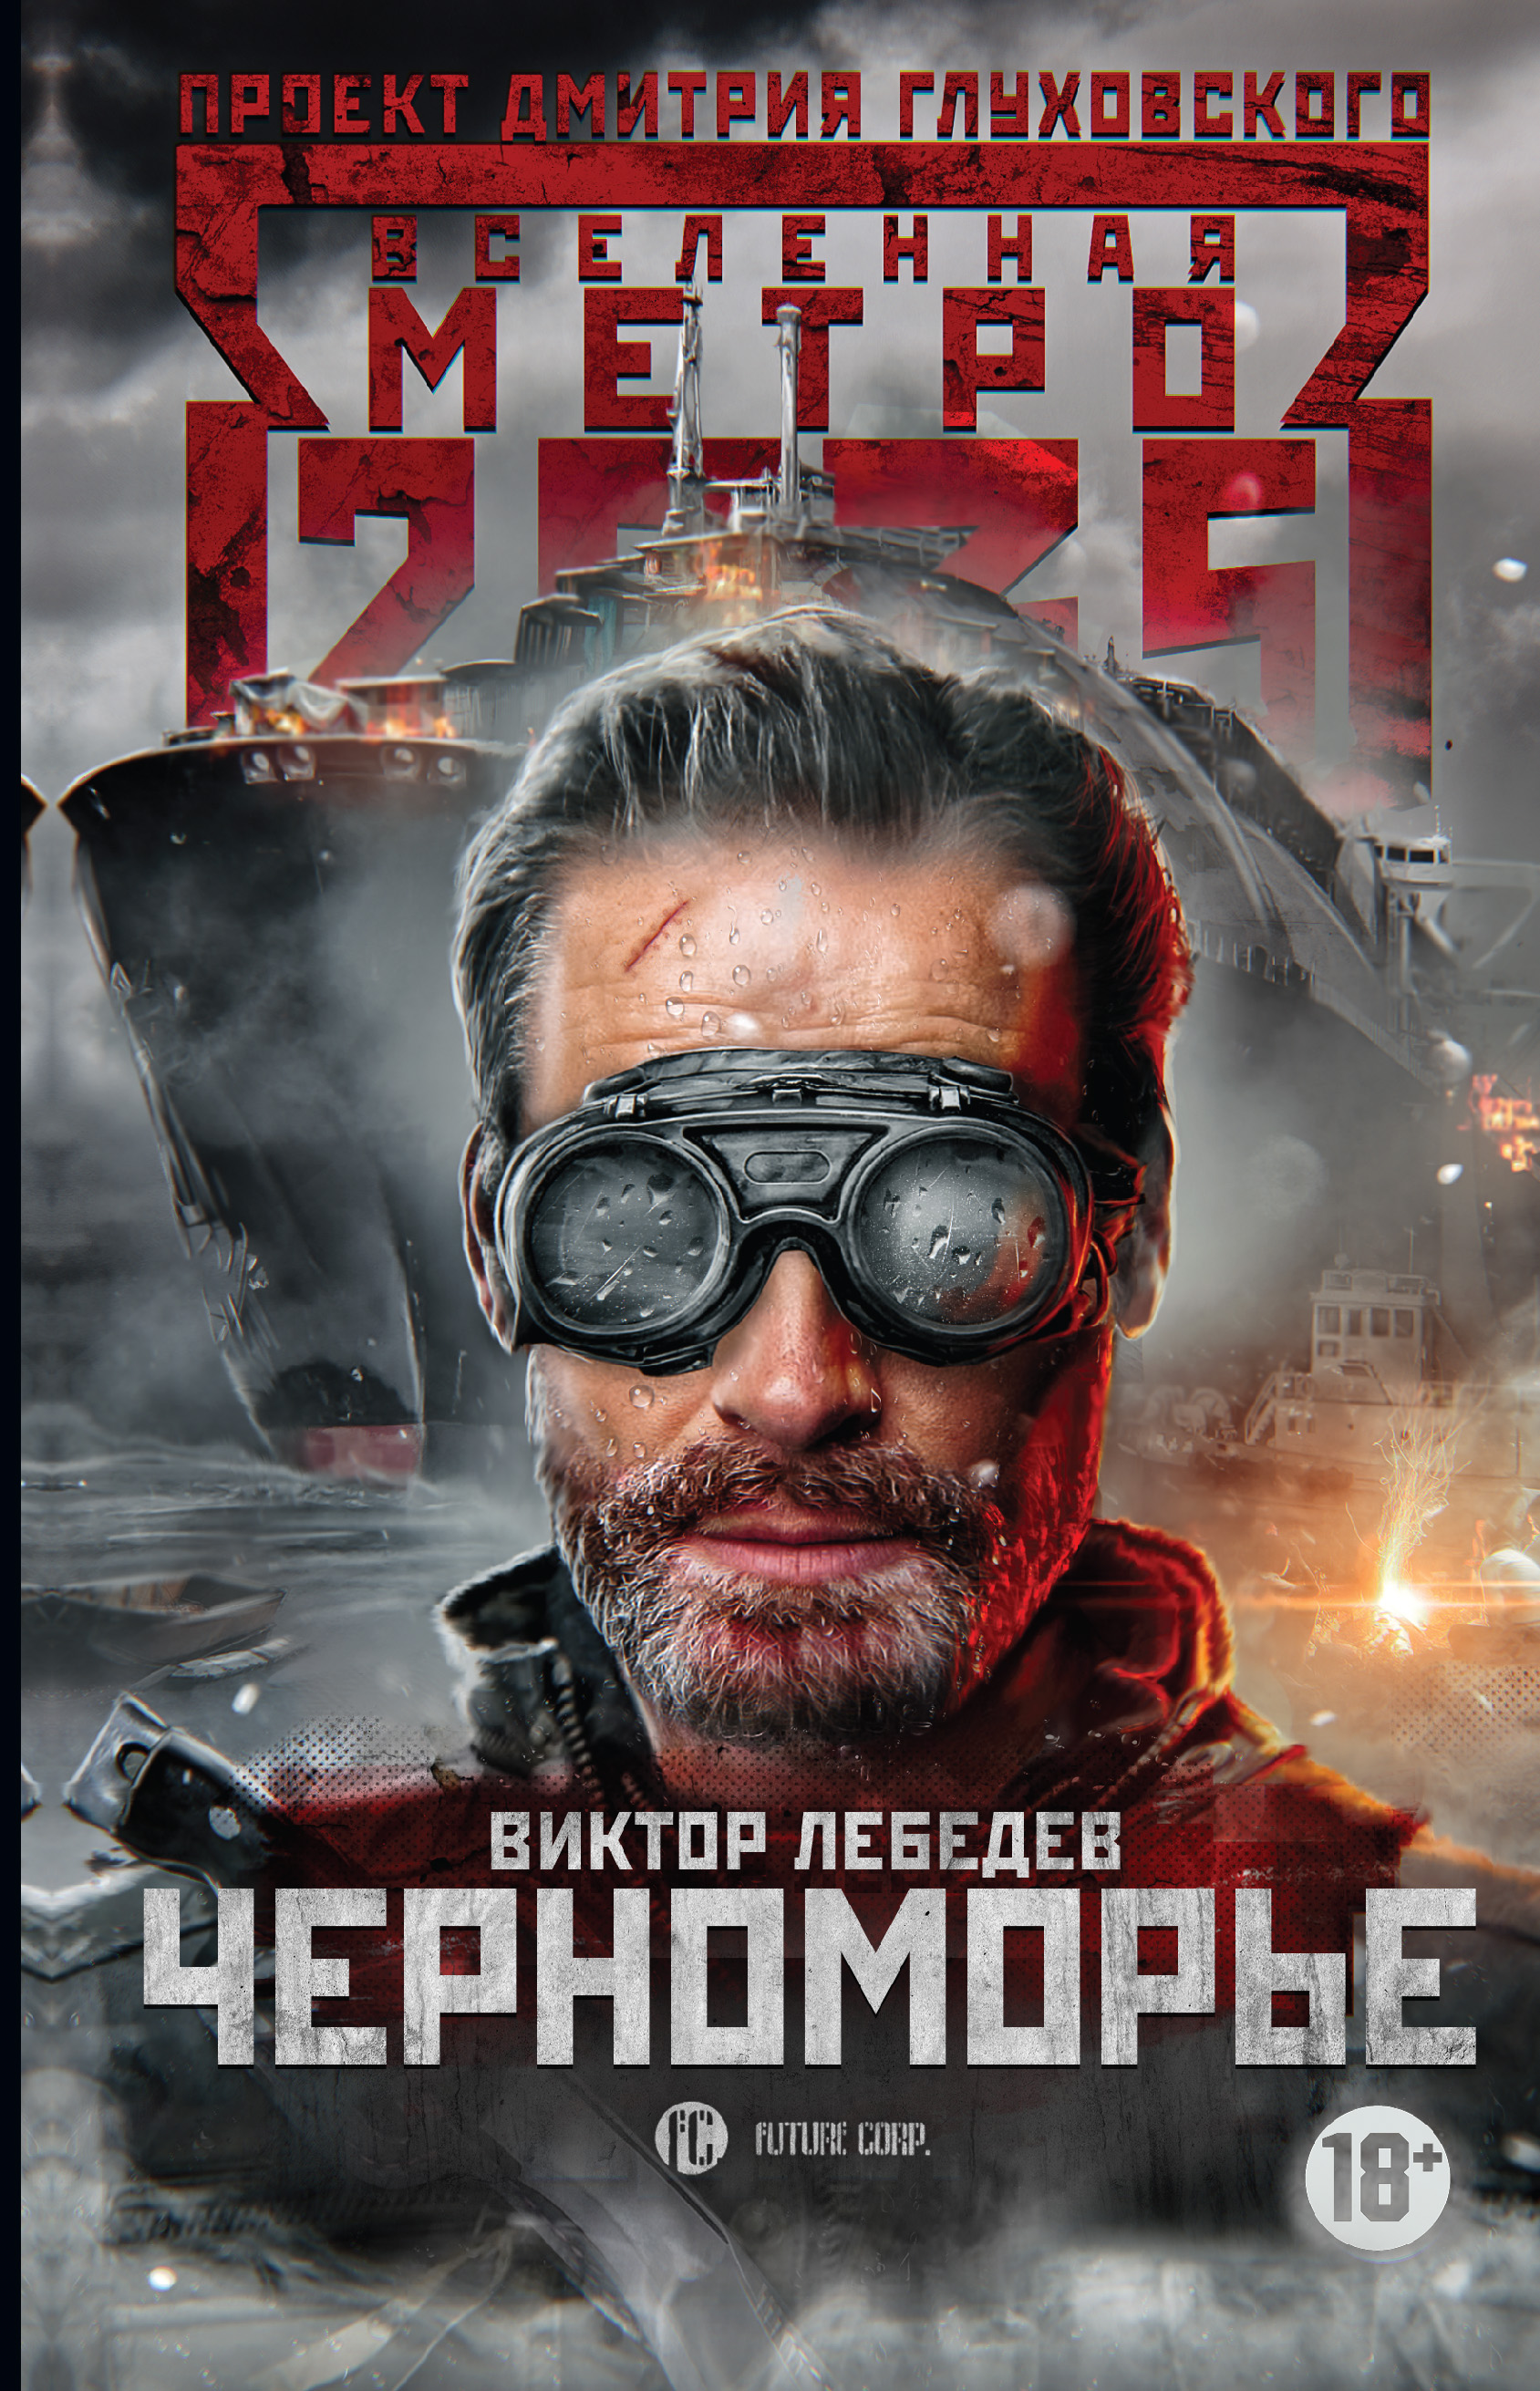 Метро 2035: Черноморье – Виктор Лебедев